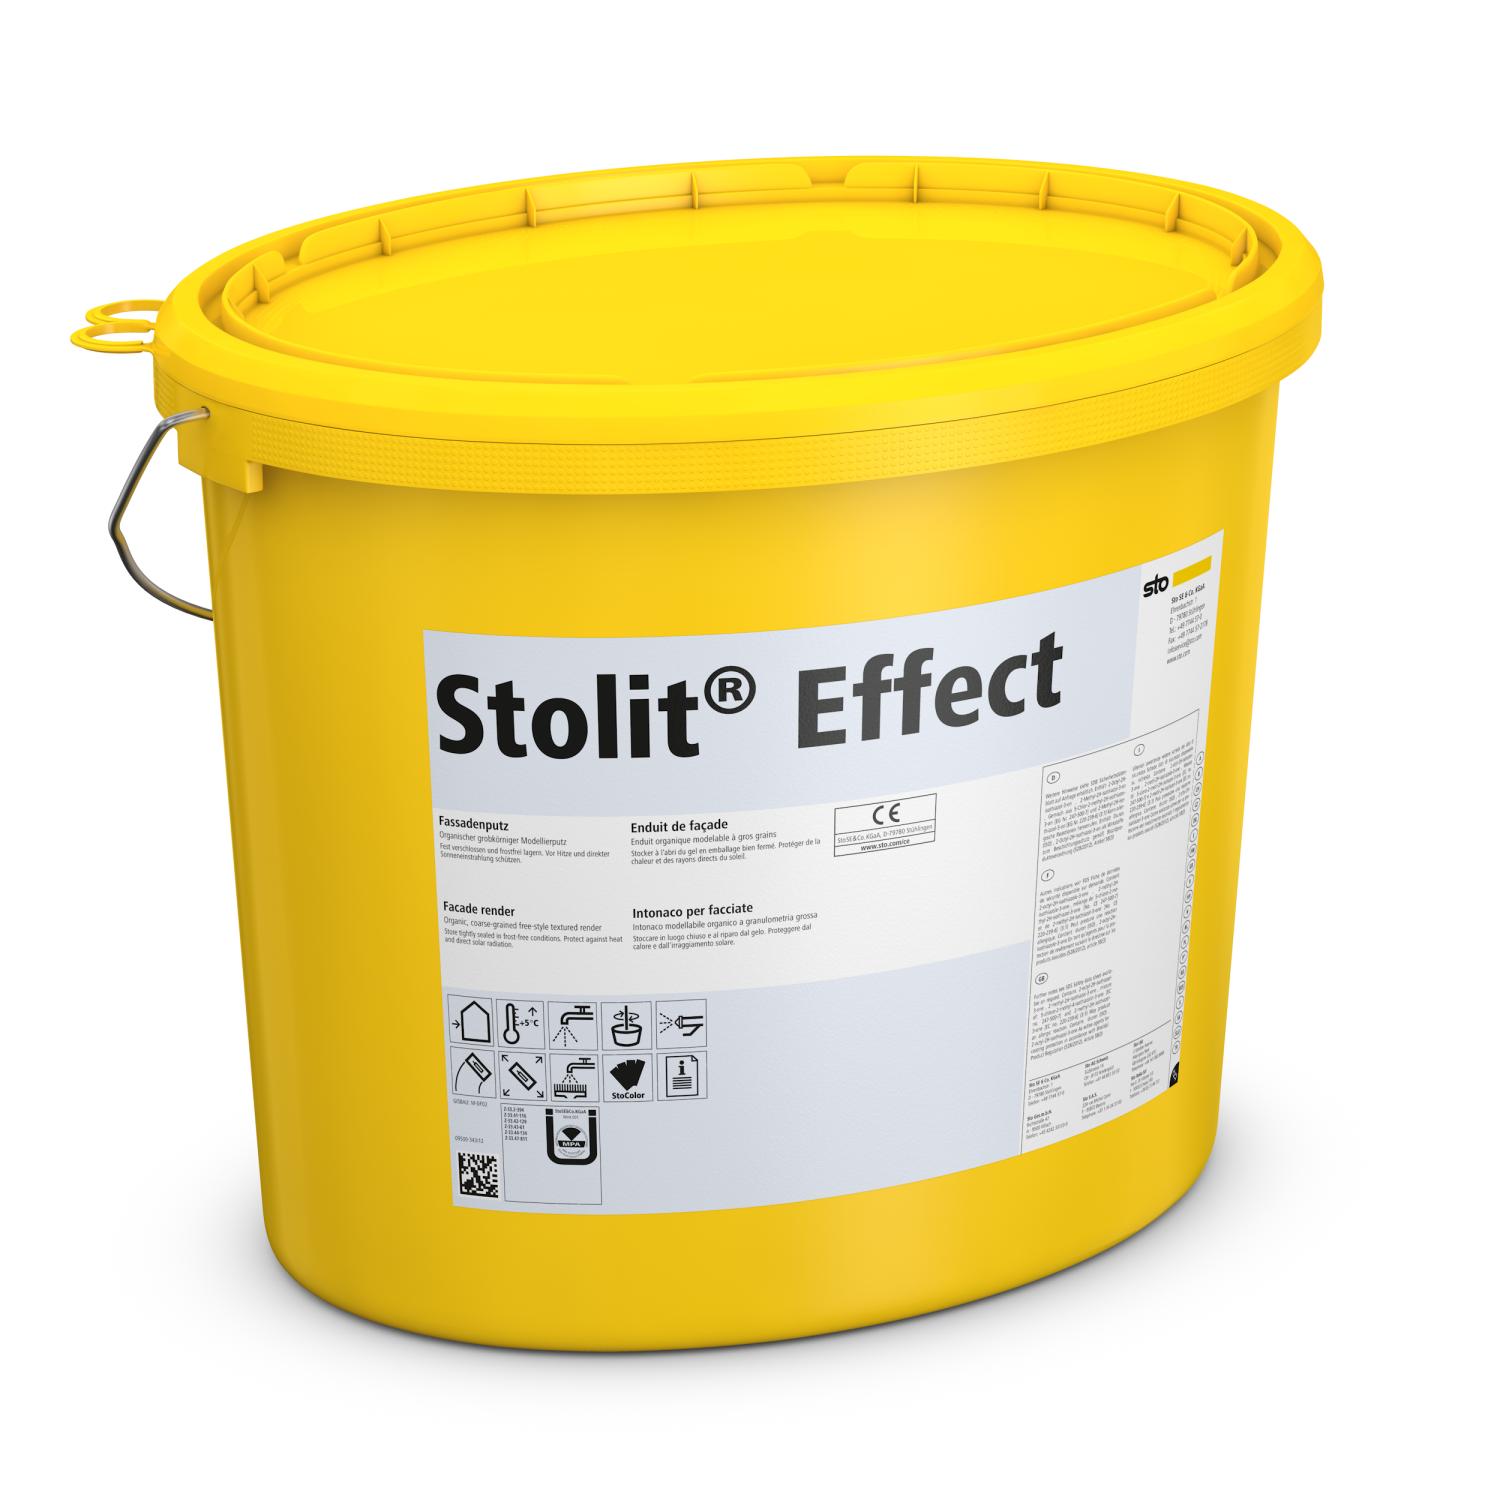 Stolit® Effect